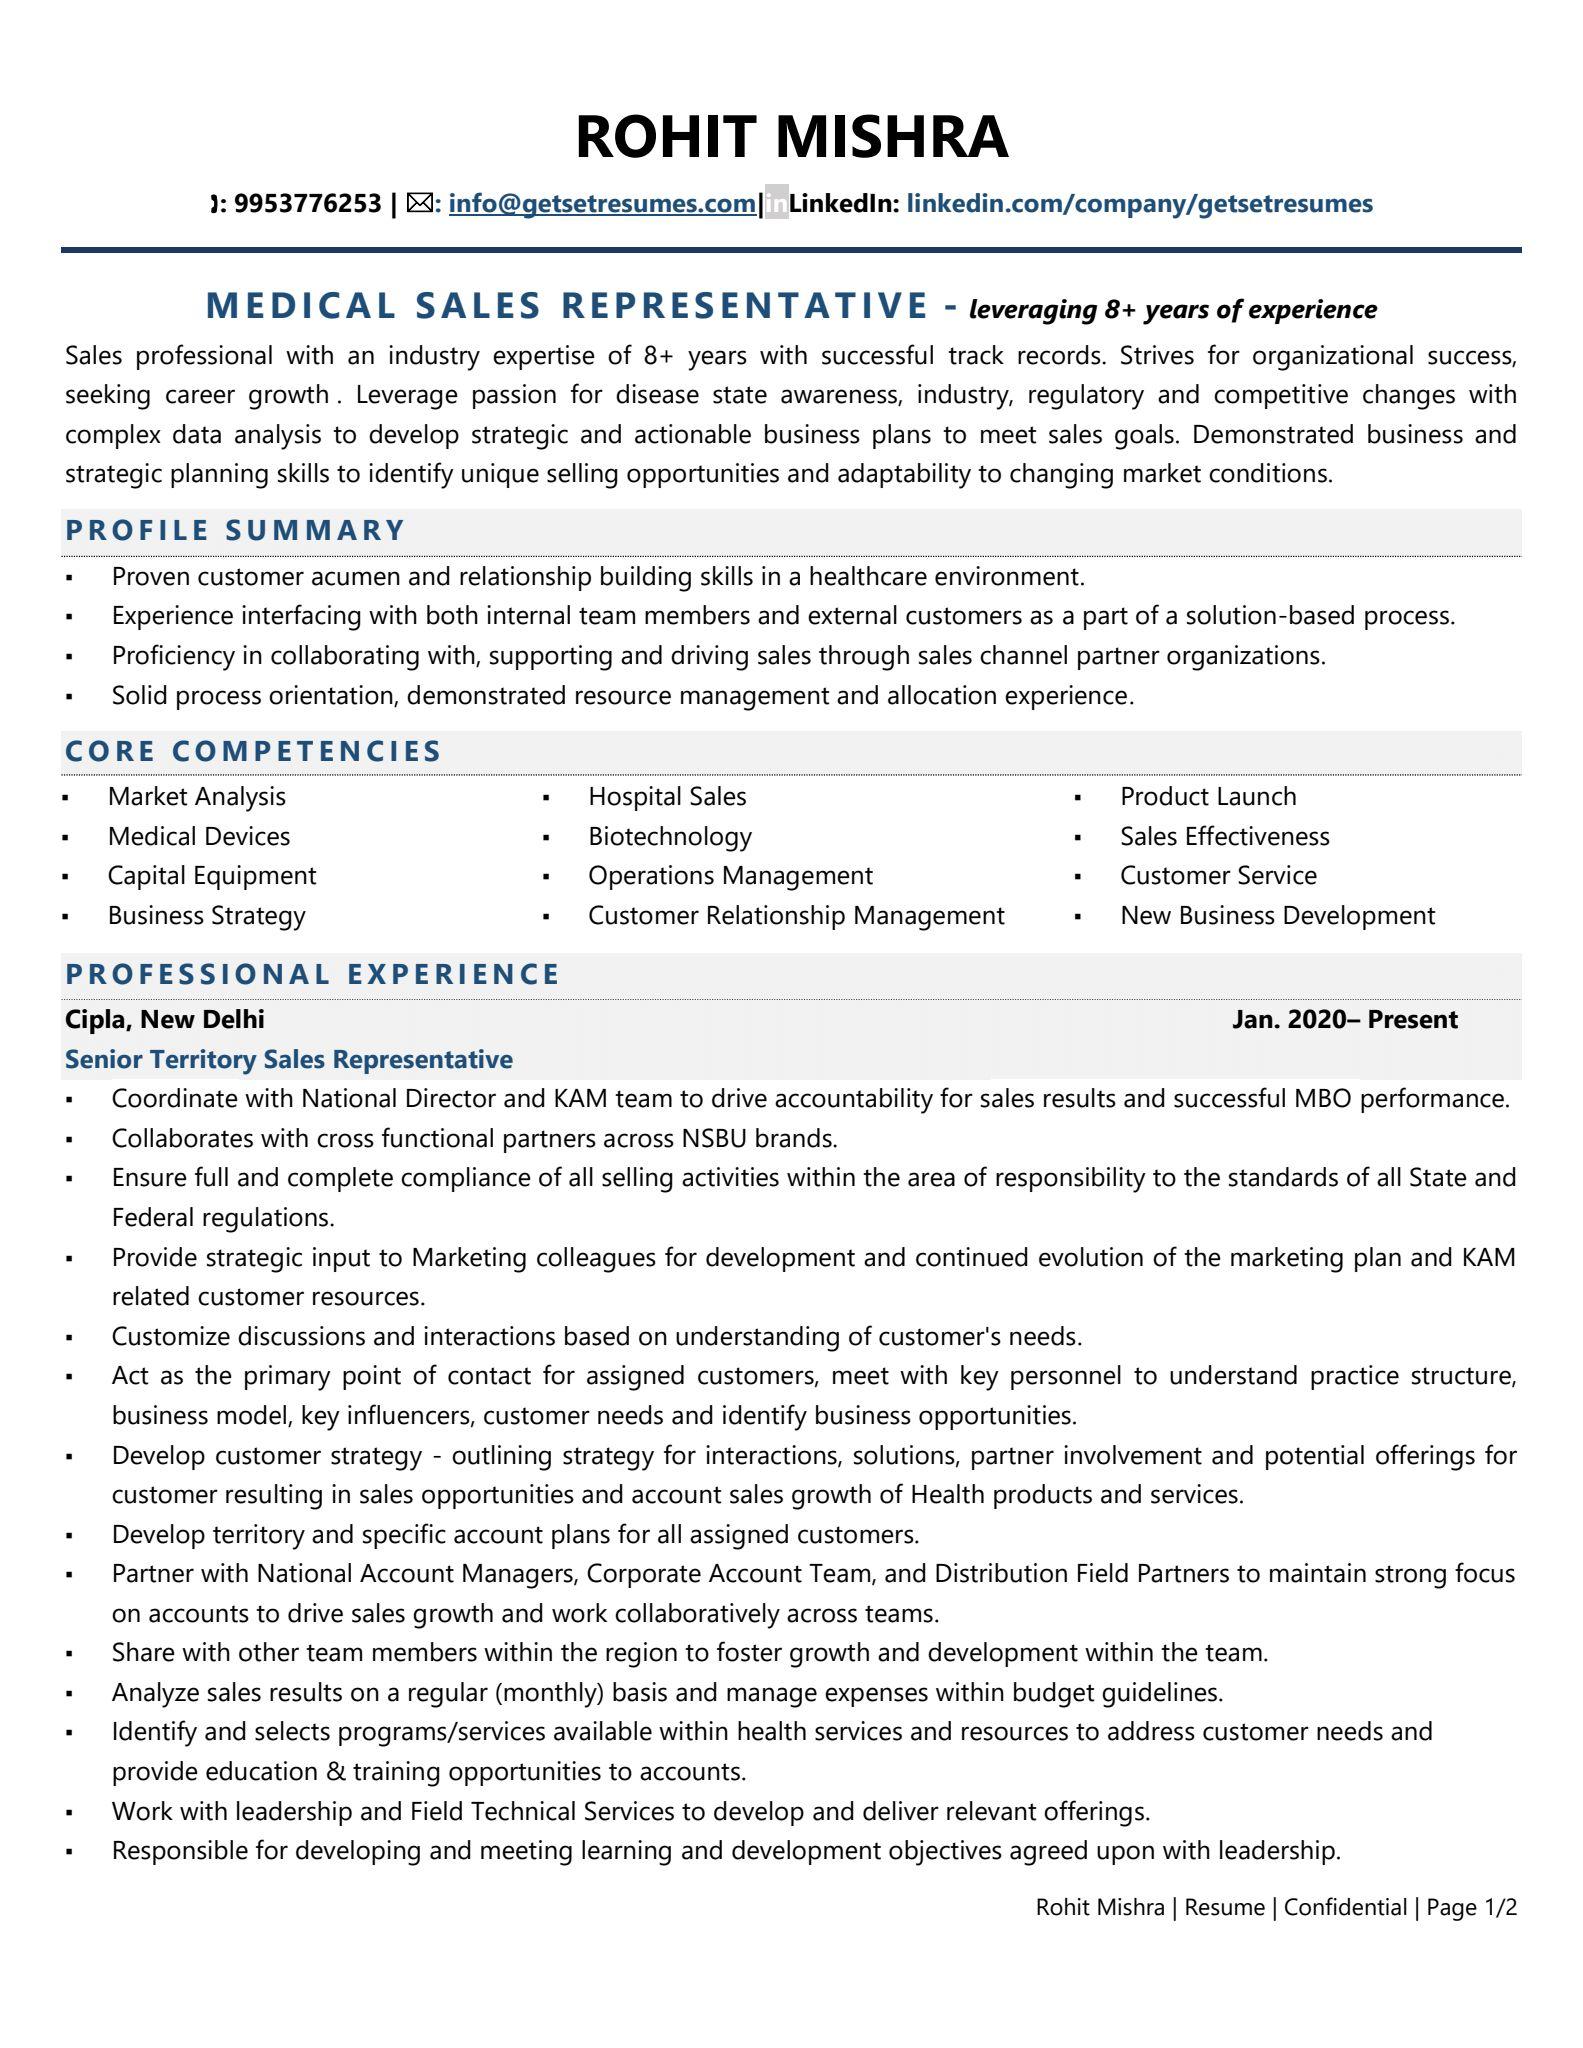 medical sales resume summary